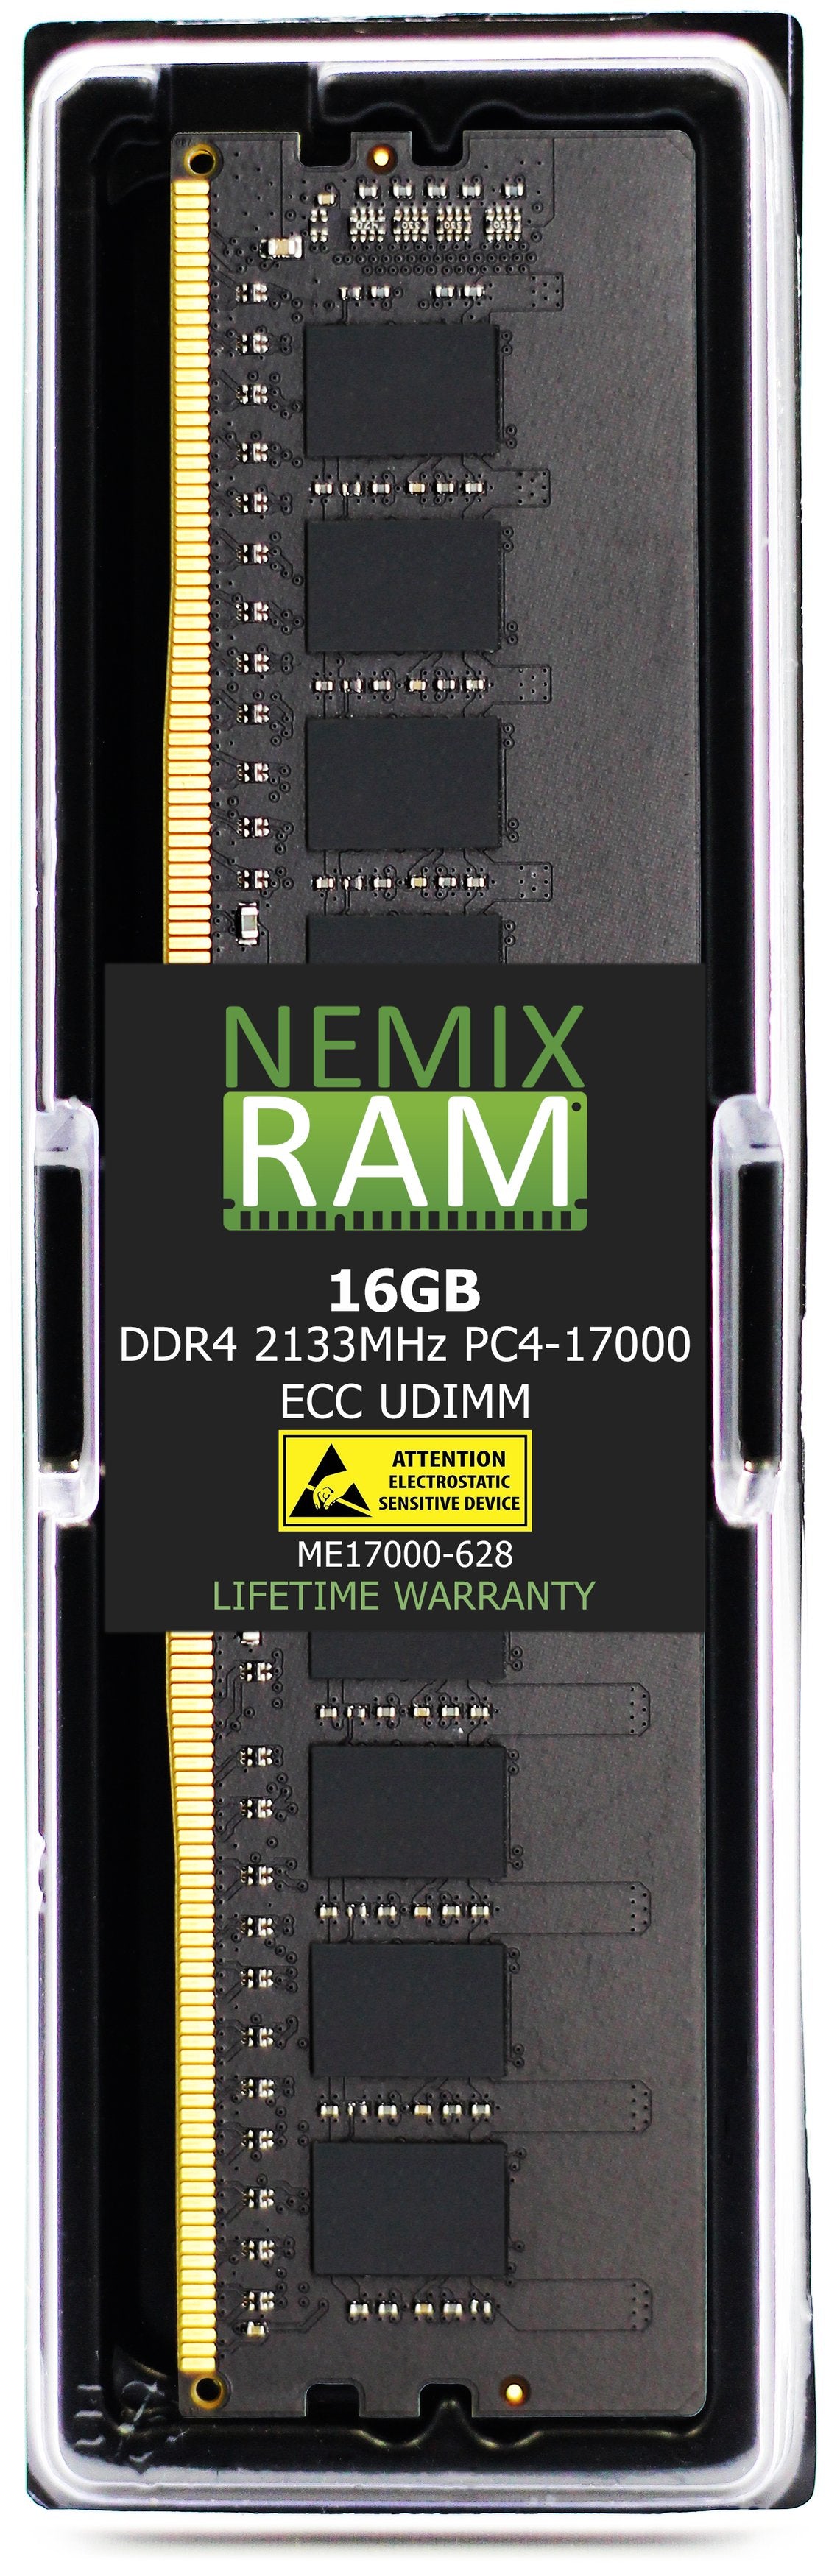 NEC Express5800 T110h Memory Module N8102-658F 16GB DDR4 2133MHZ PC4-17000 ECC UDIMM